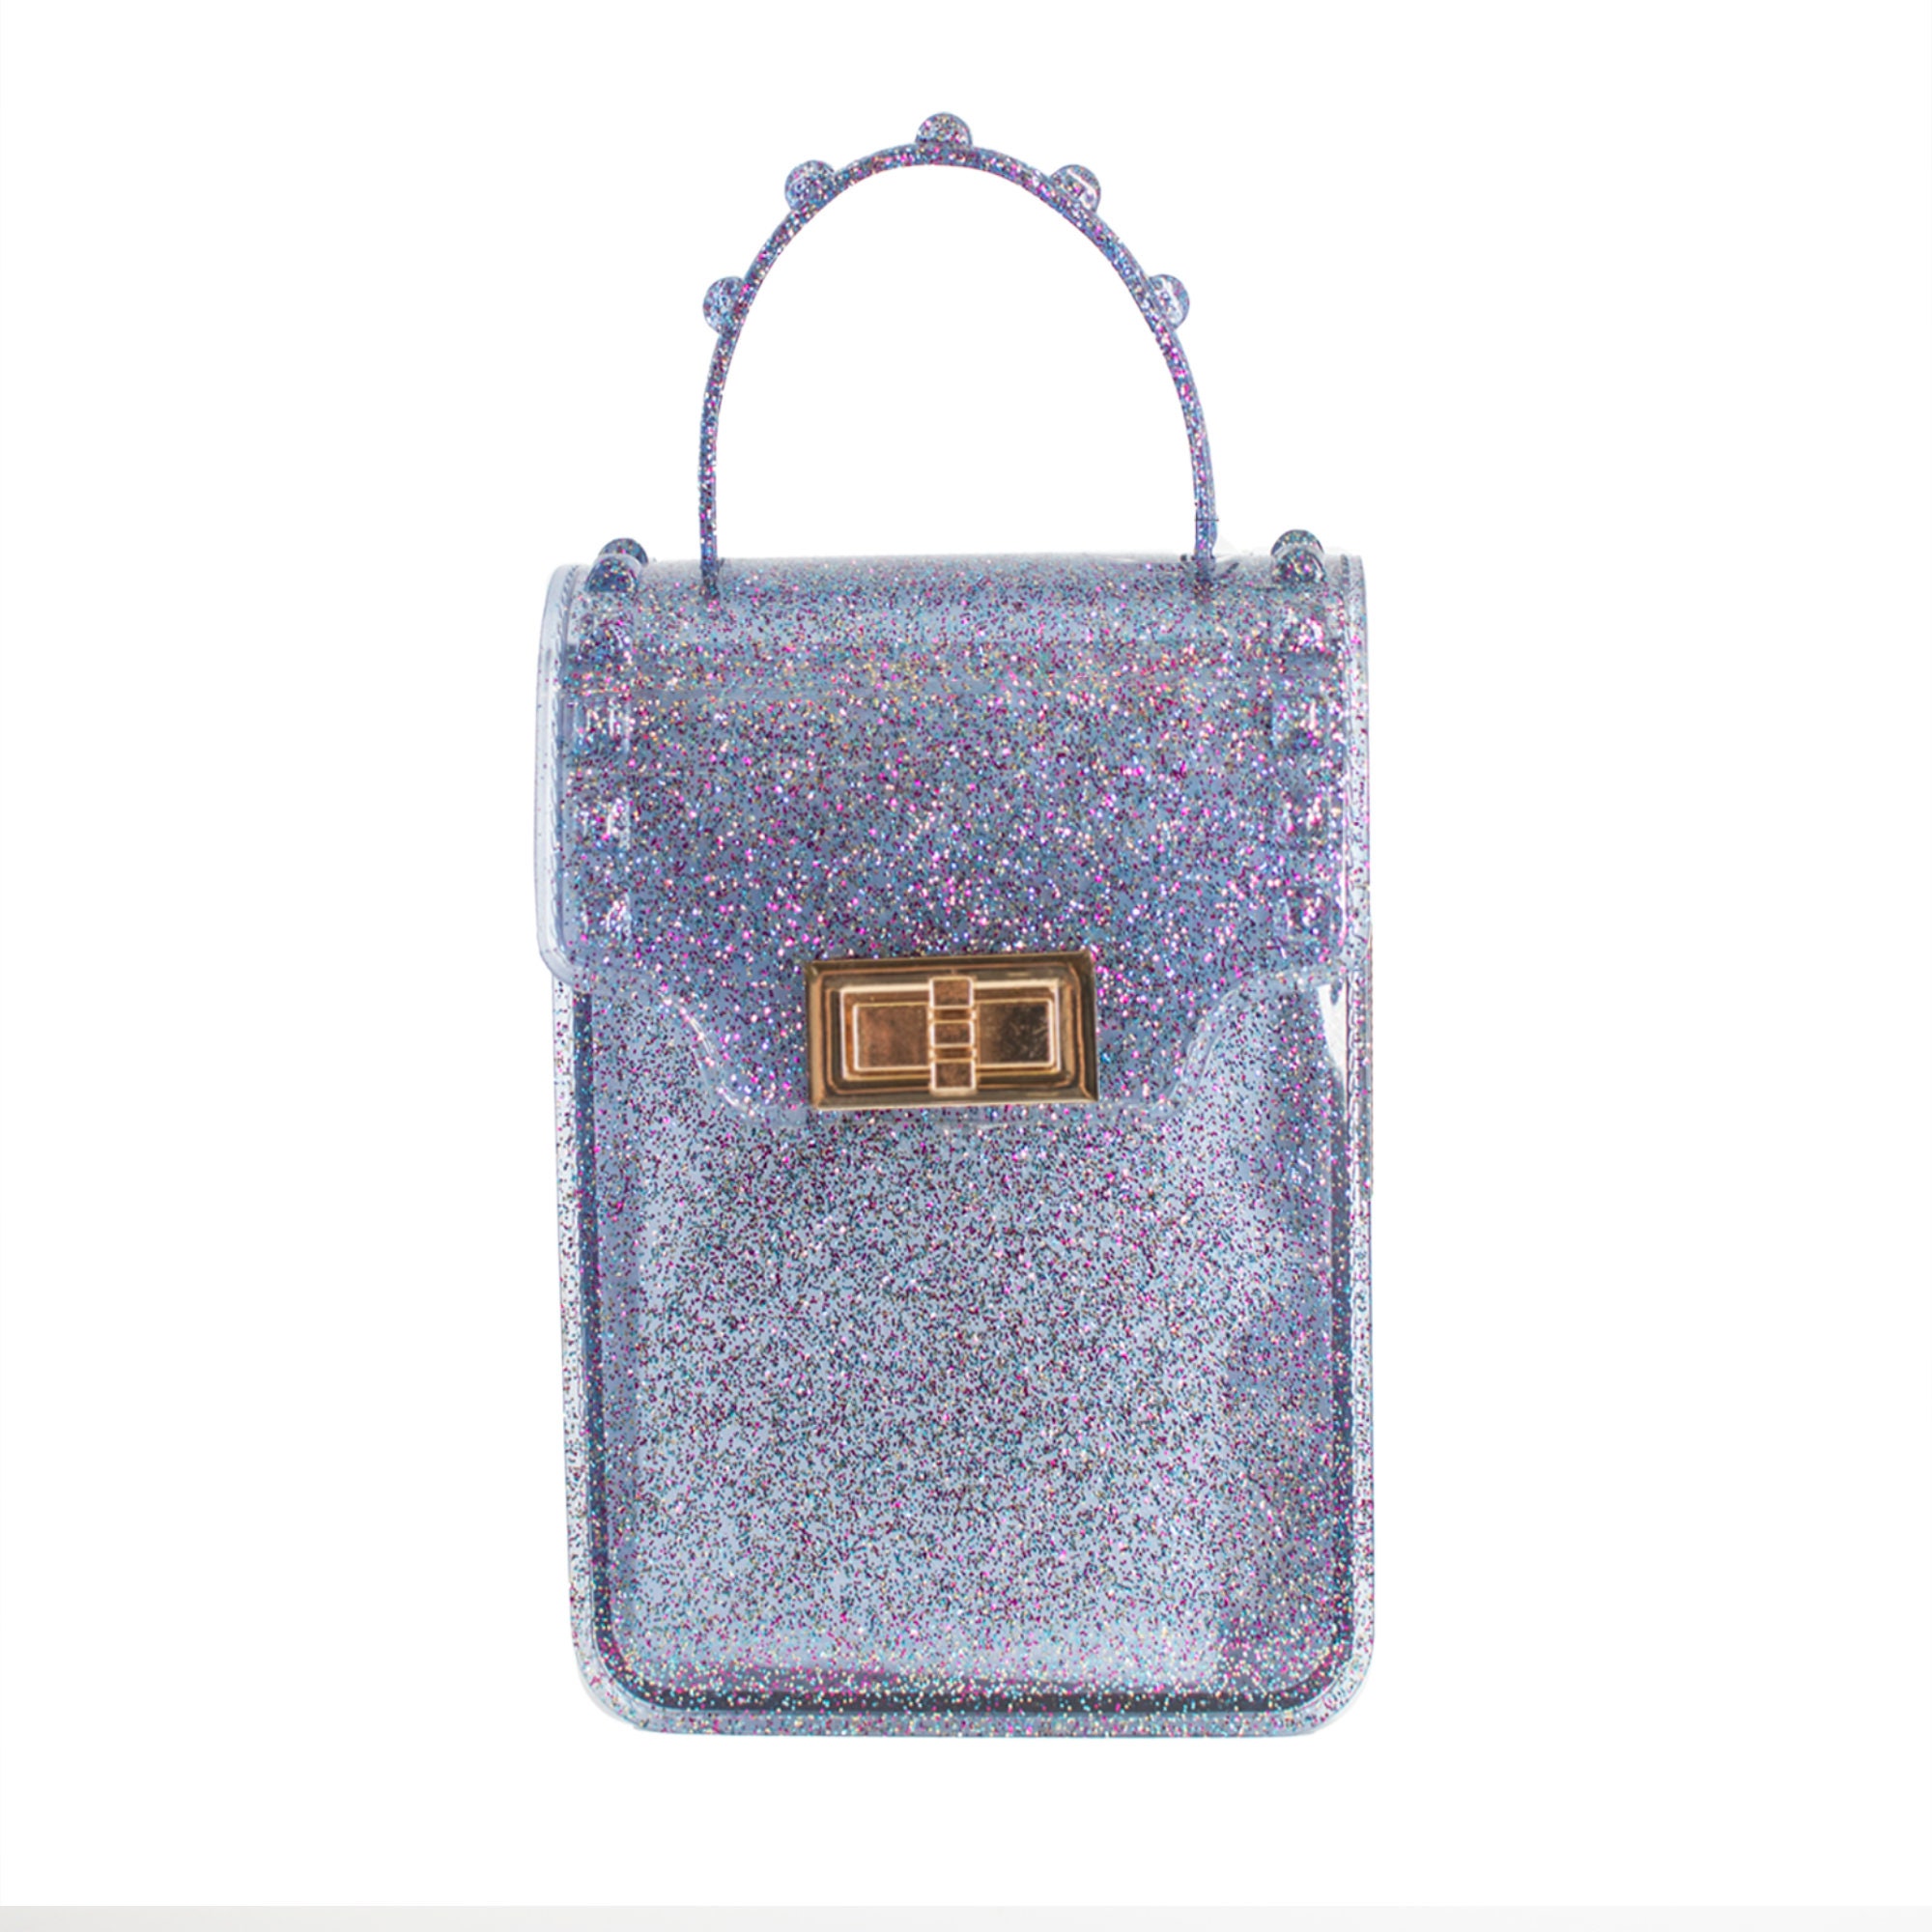 WD0832) Hot Sale Small Jelly Bags Women Hand Bag Designer Handbags